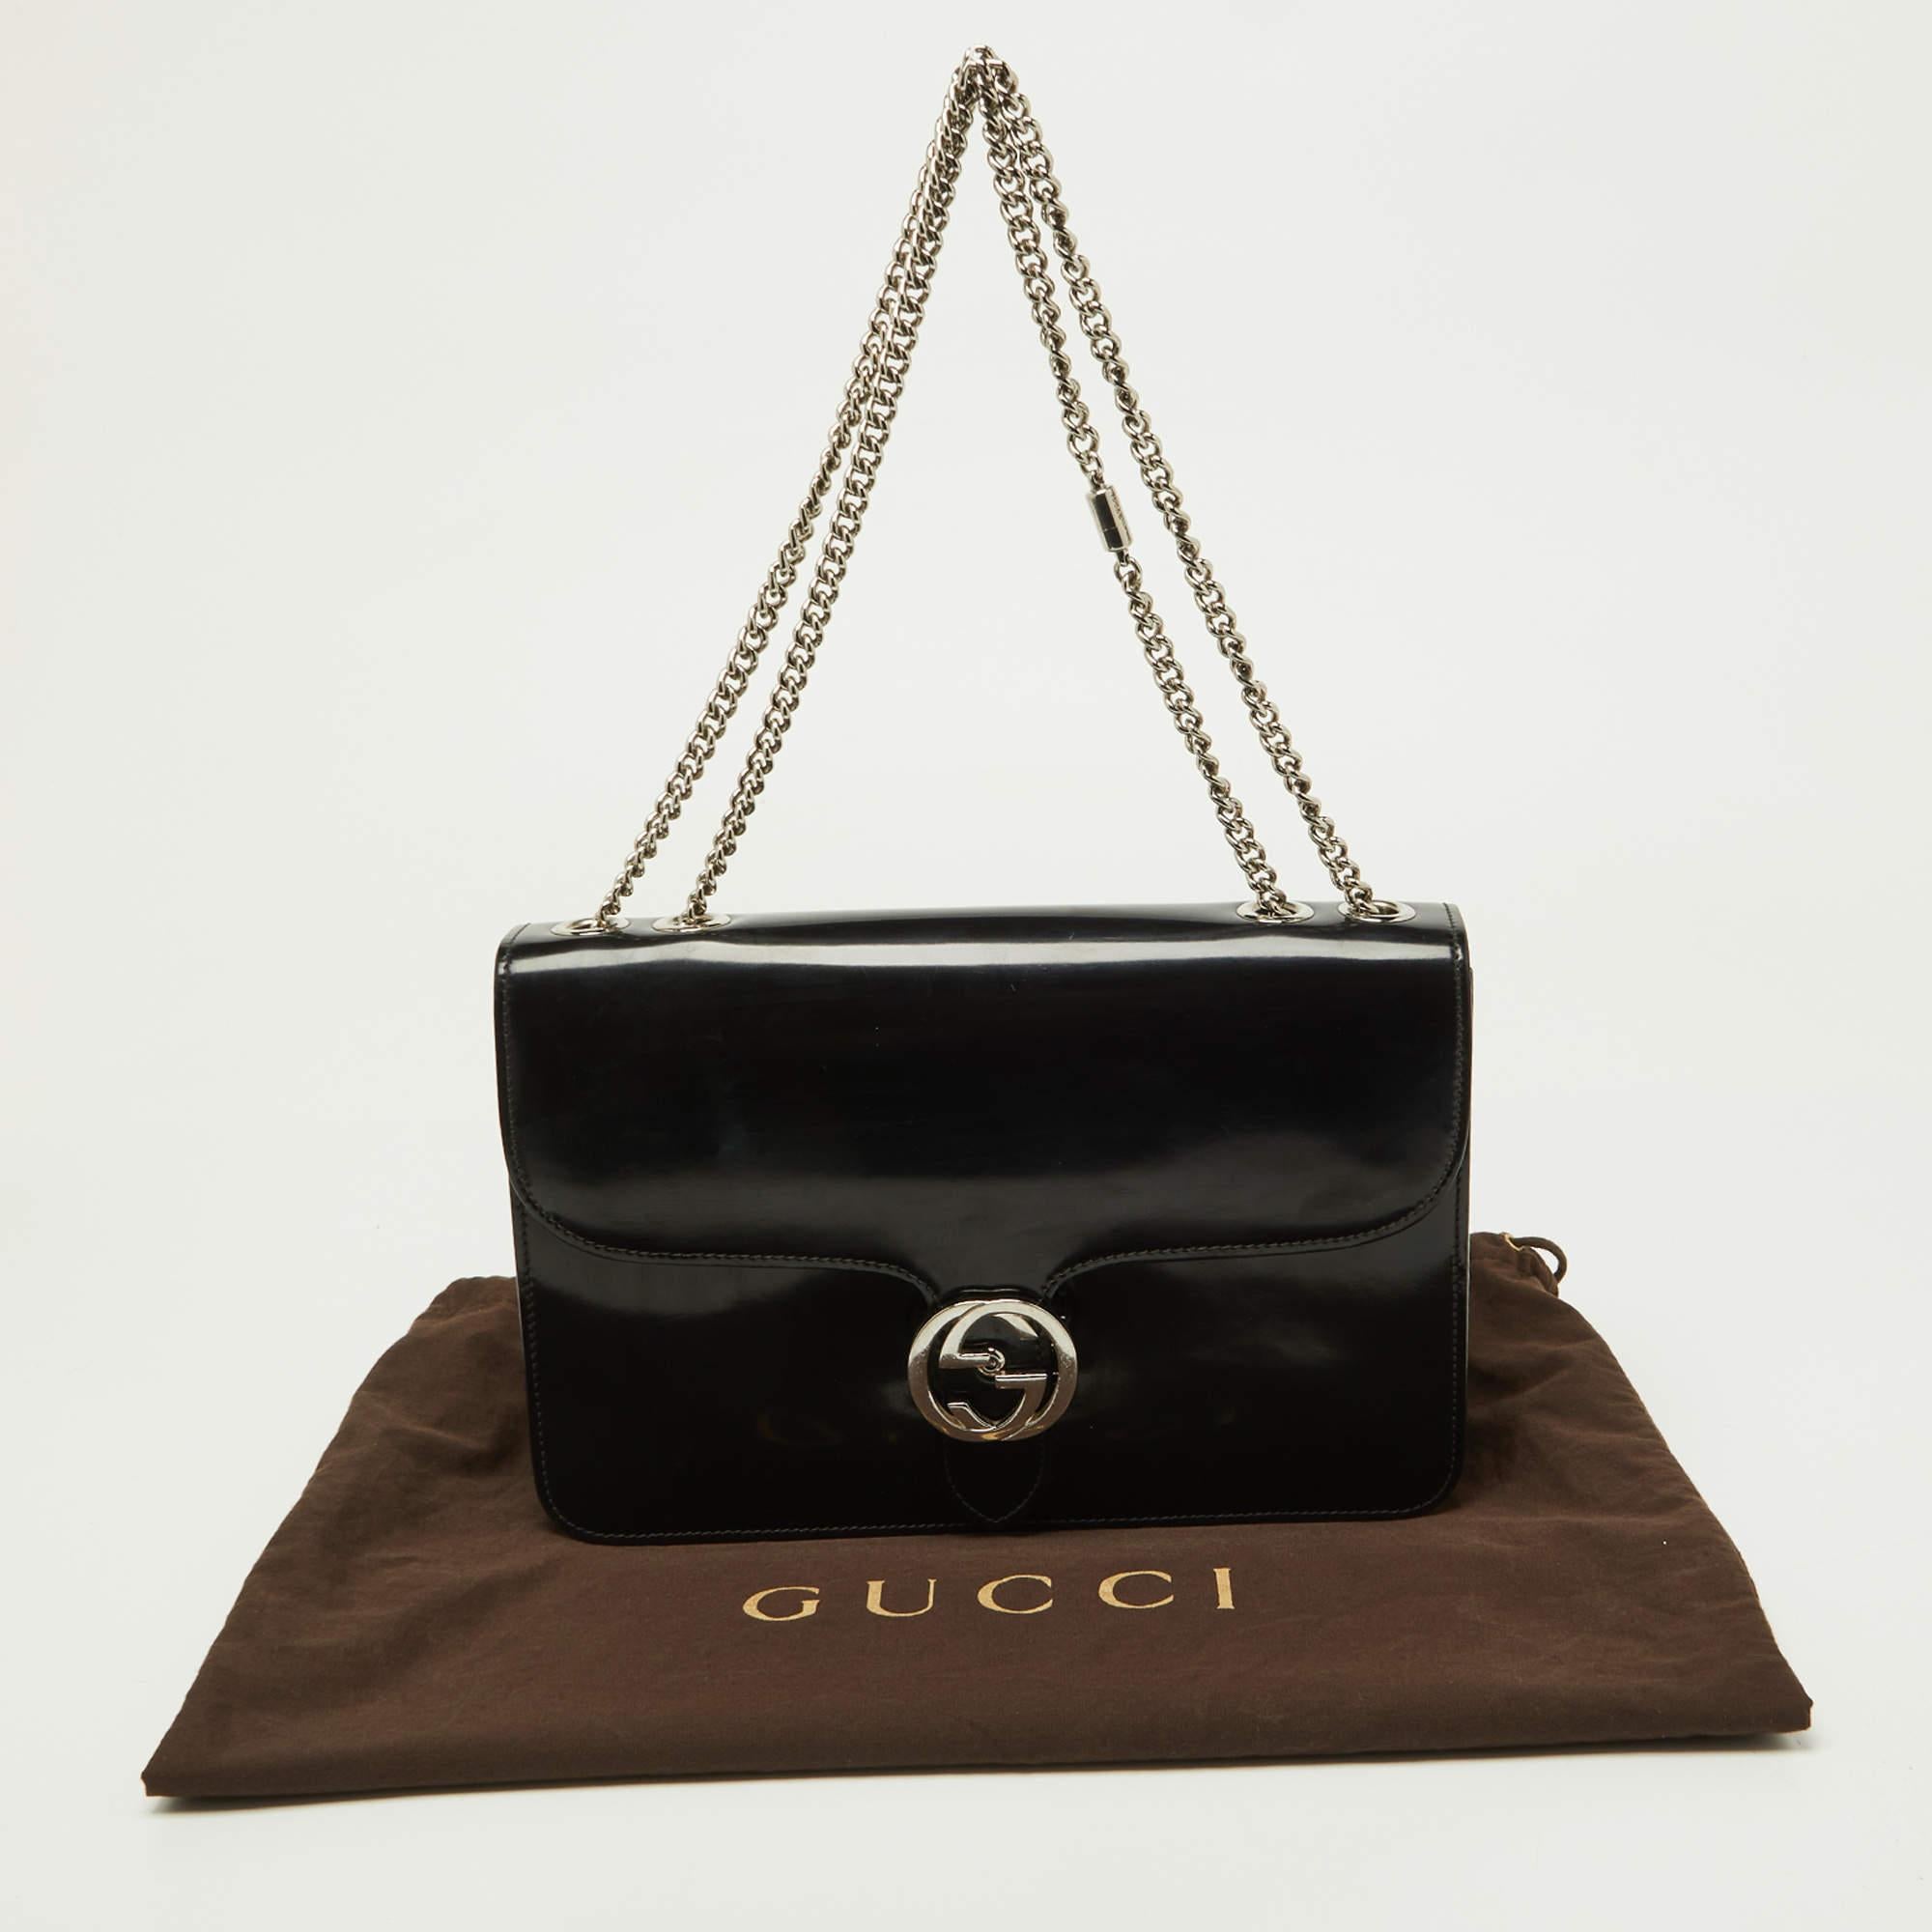 Gucci Black Leather Medium Interlocking G Shoulder Bag 13